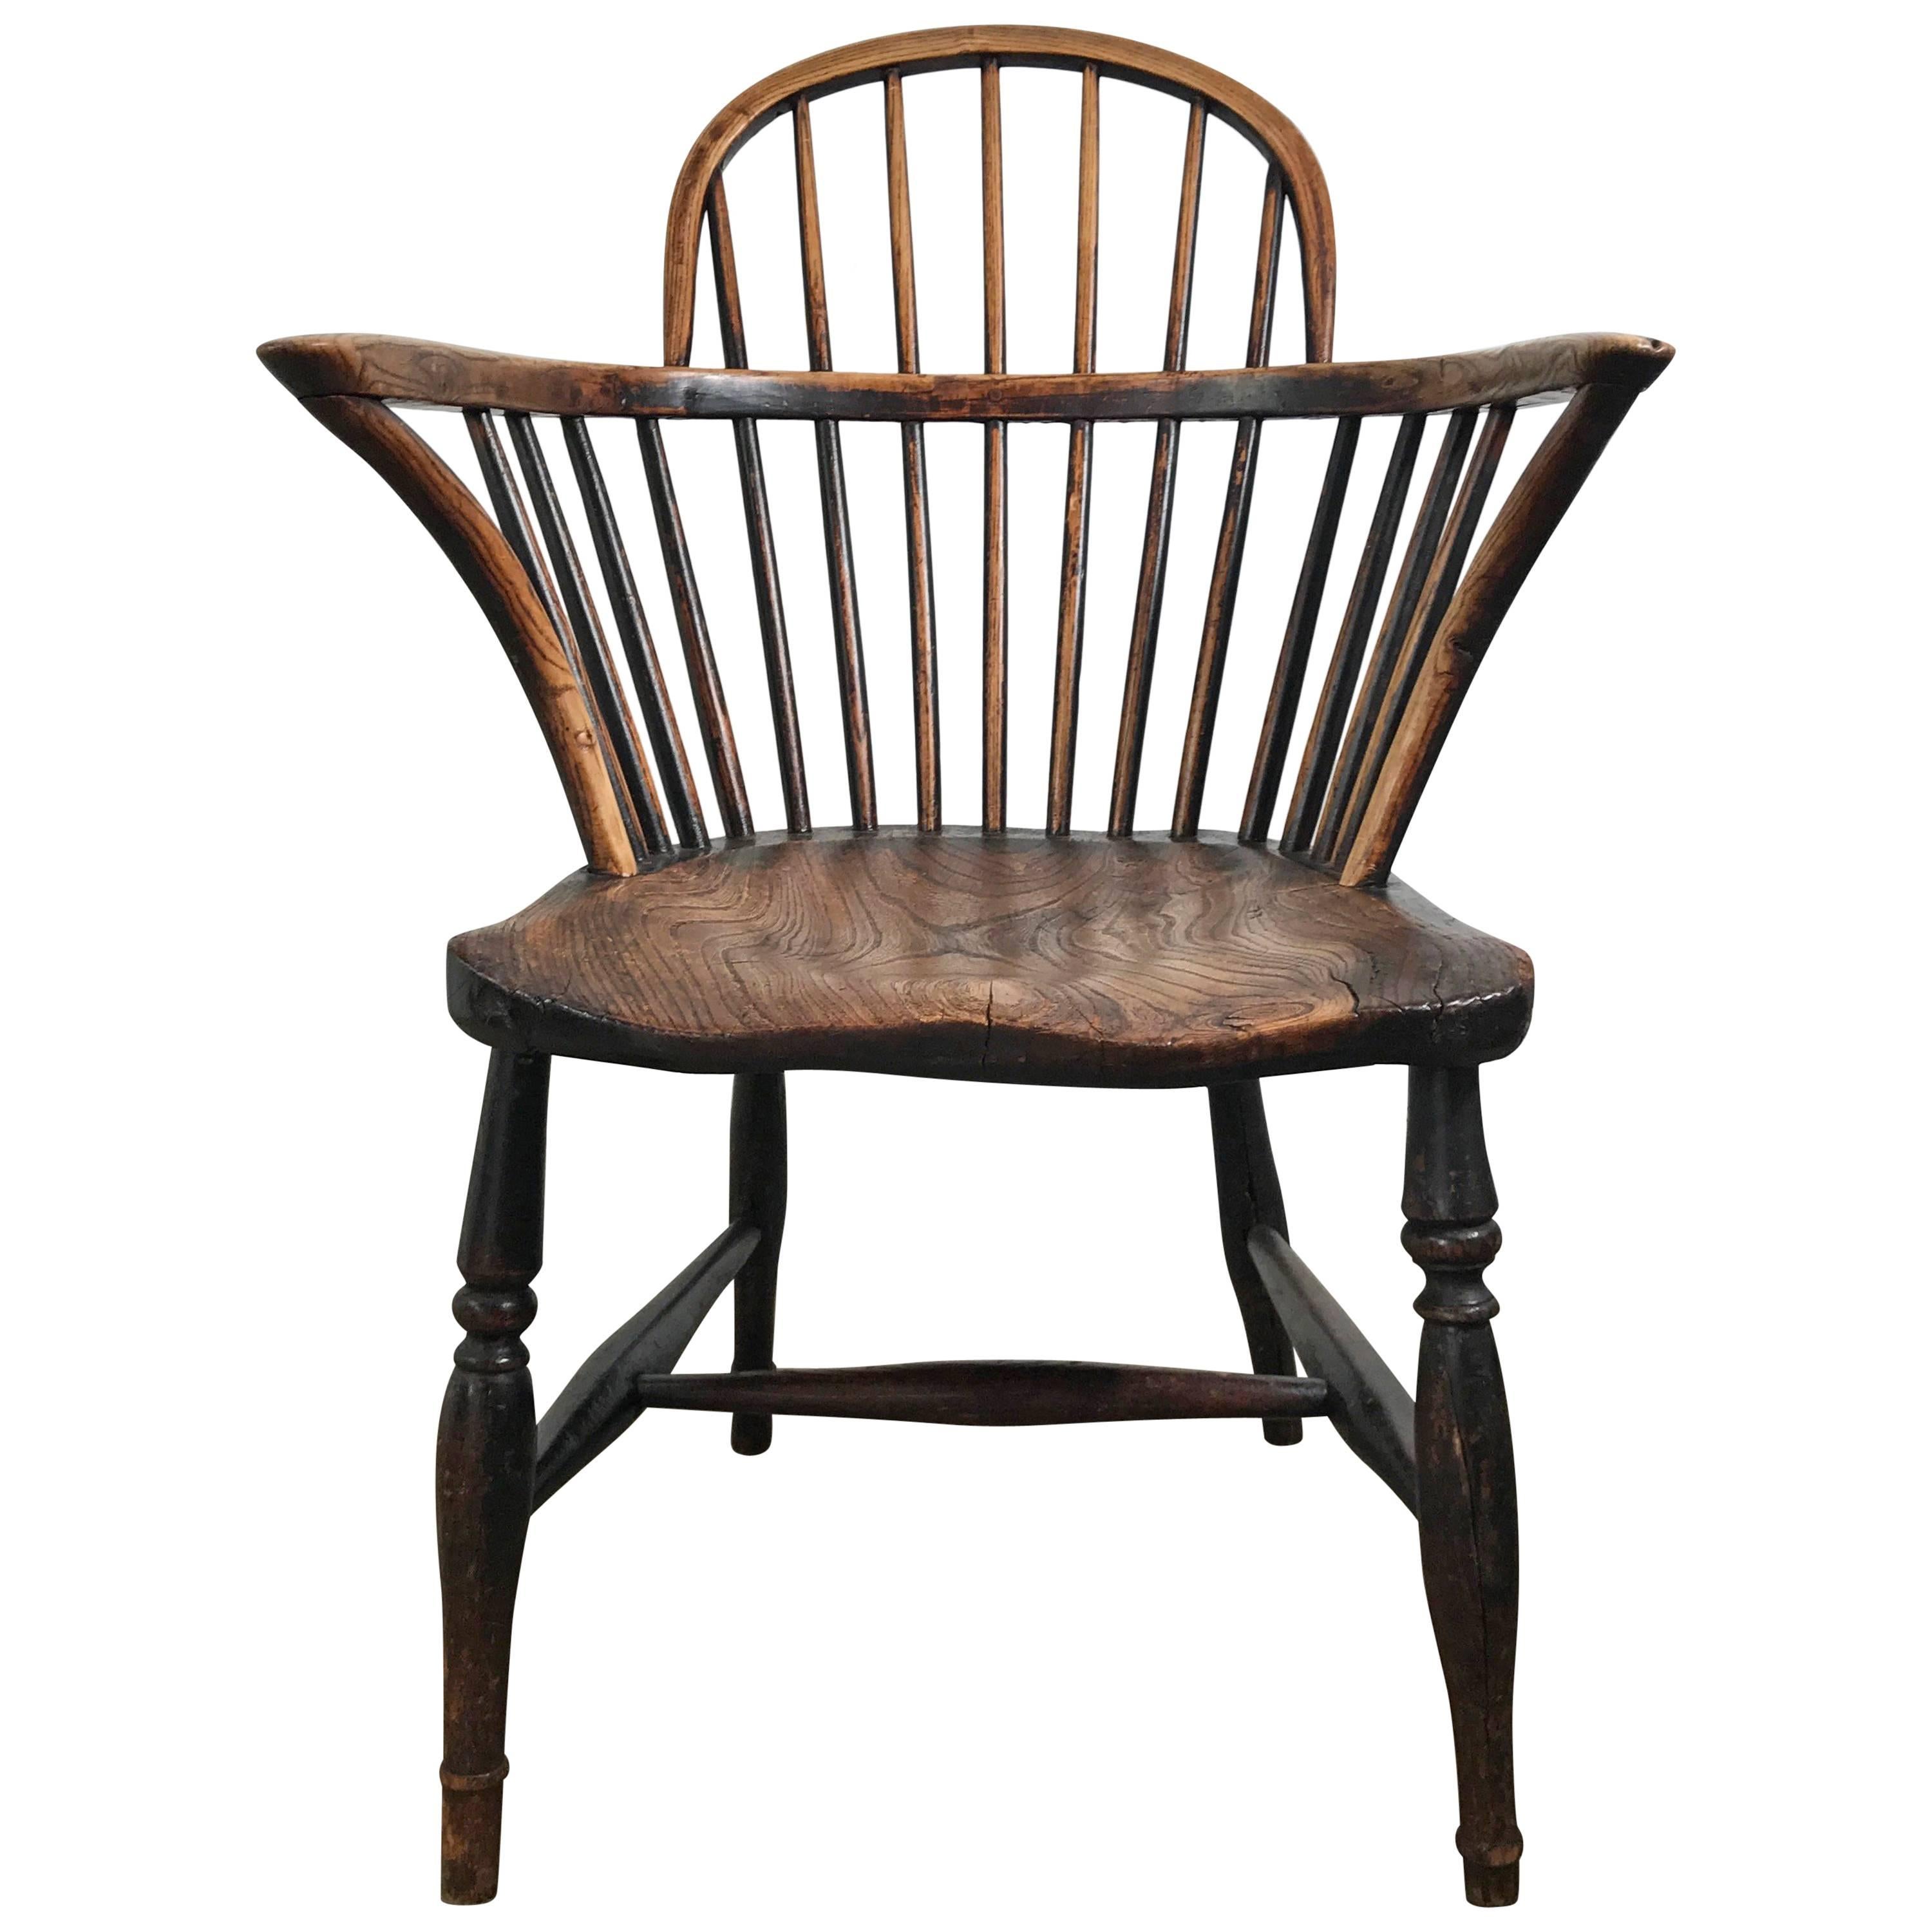 Classic English Elm Antique Windsor Chair